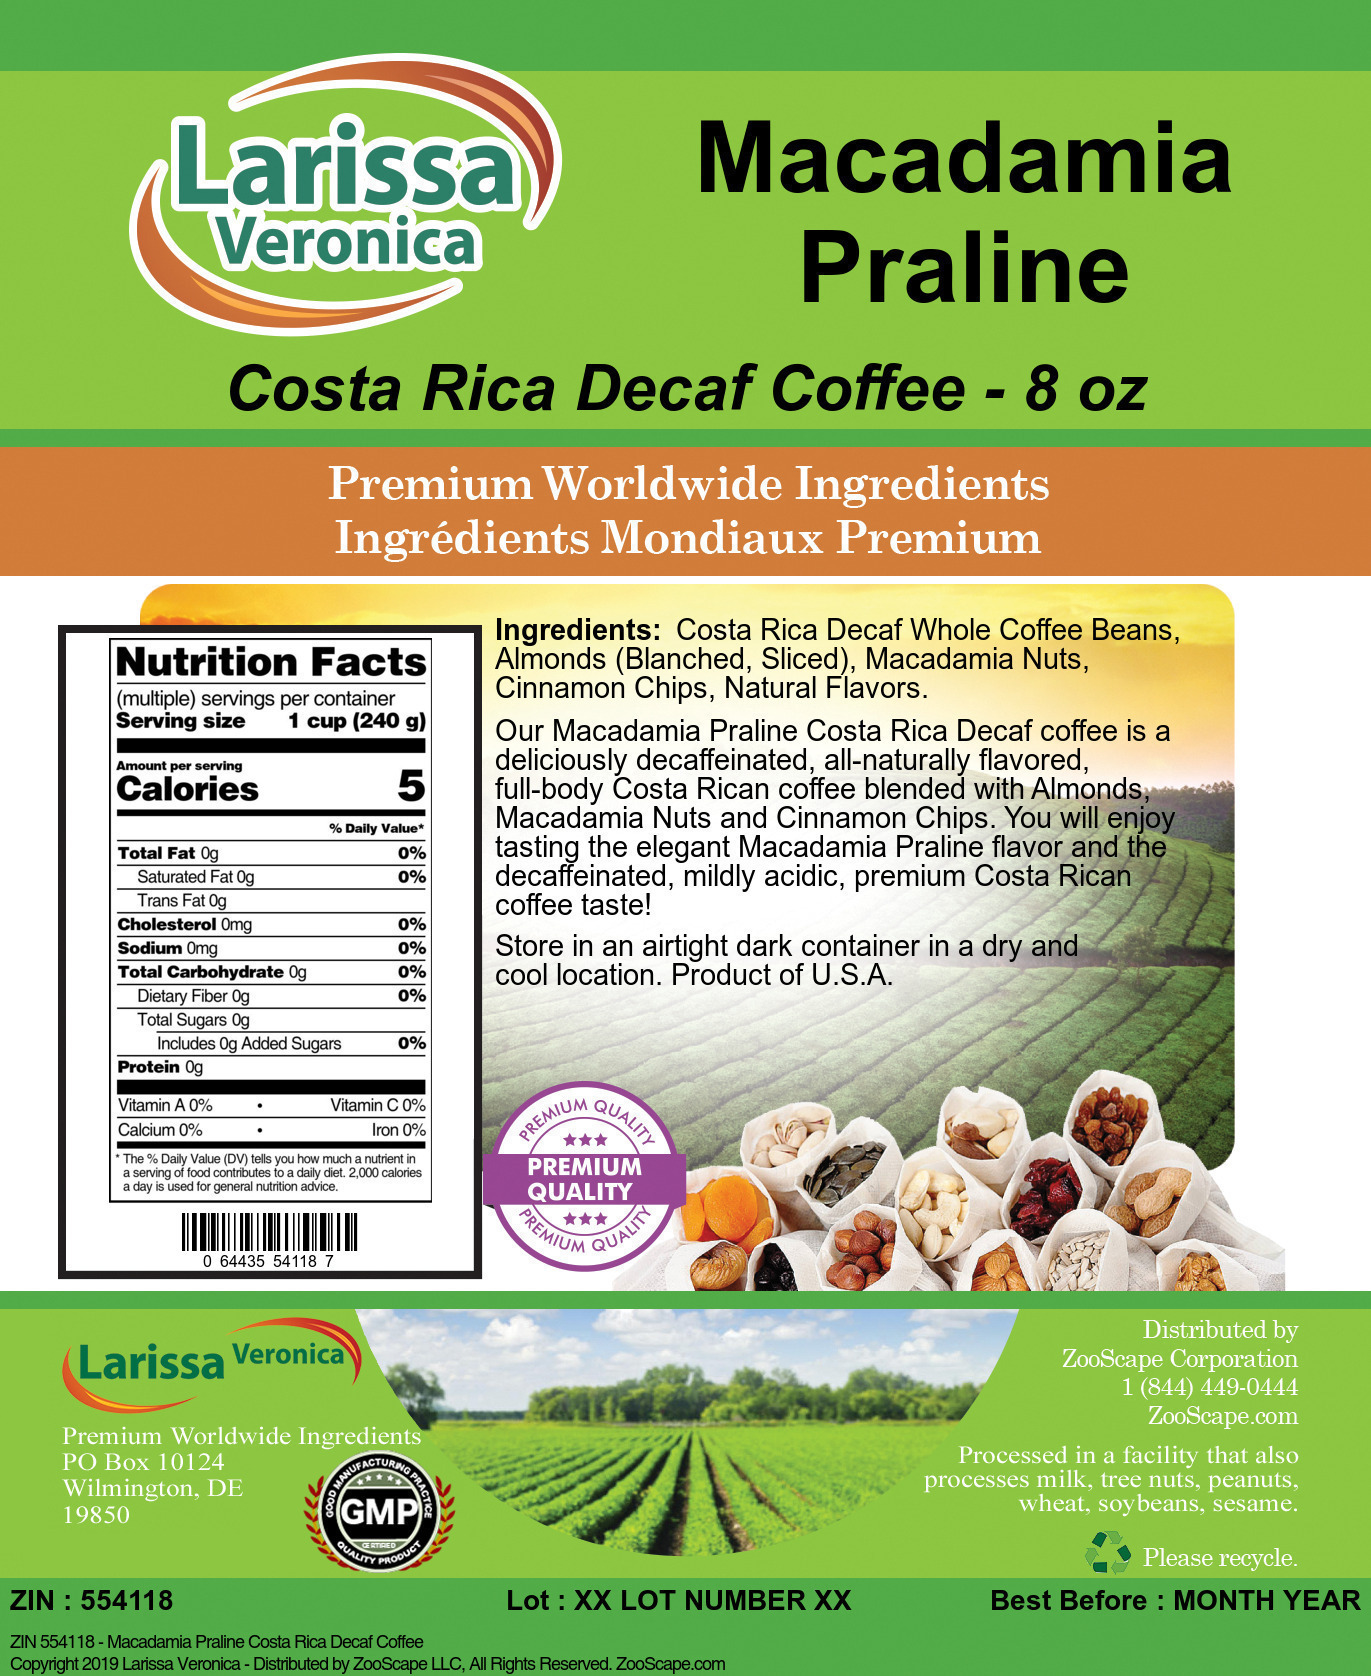 Macadamia Praline Costa Rica Decaf Coffee - Label